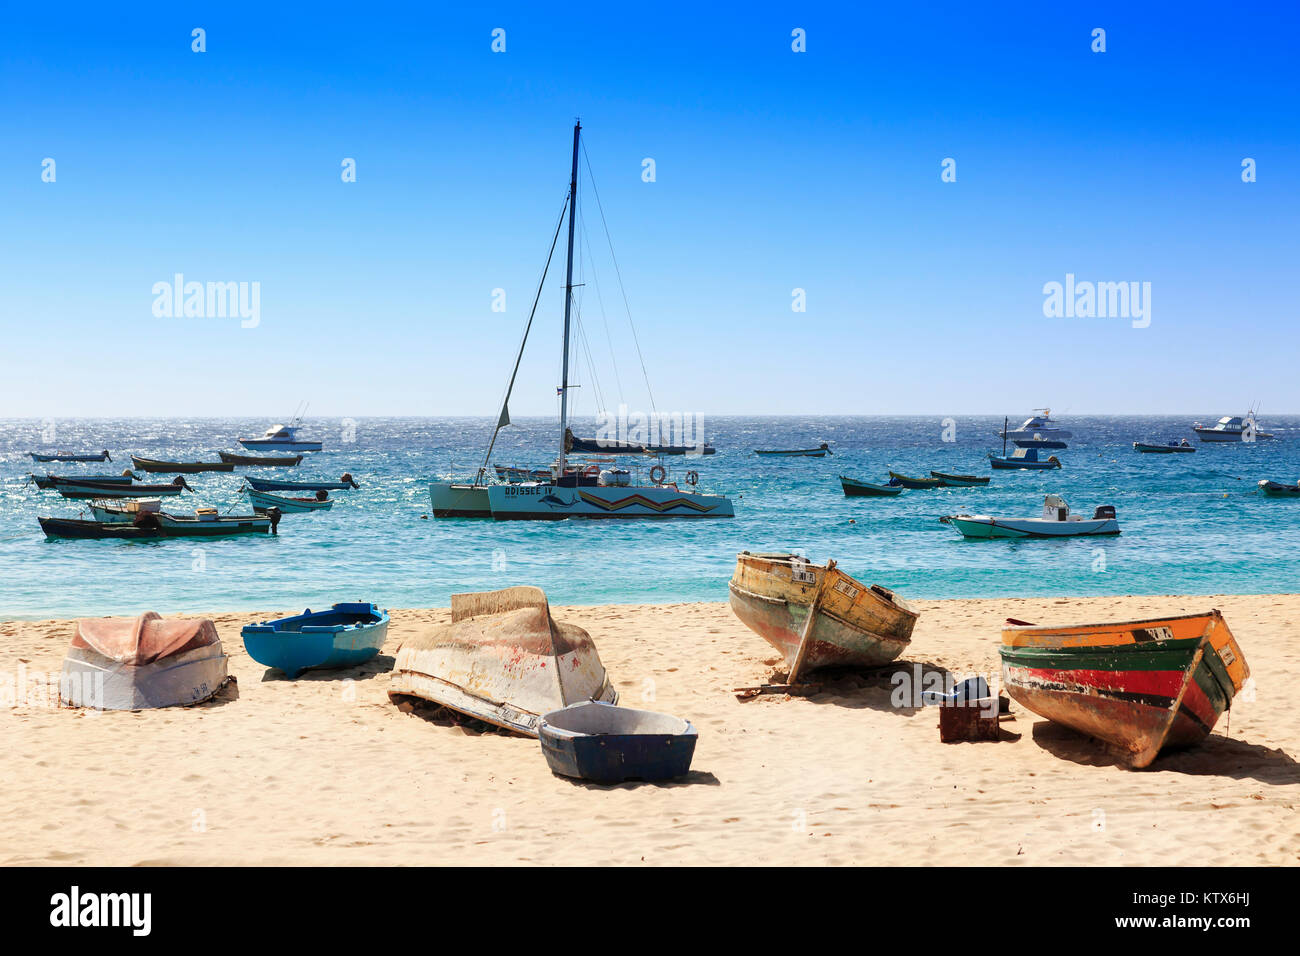 Selection of traditional wooden fishing boats and yachts in the bay at Santa Maria, Sal Island, Salina, Cape Verde Stock Photo